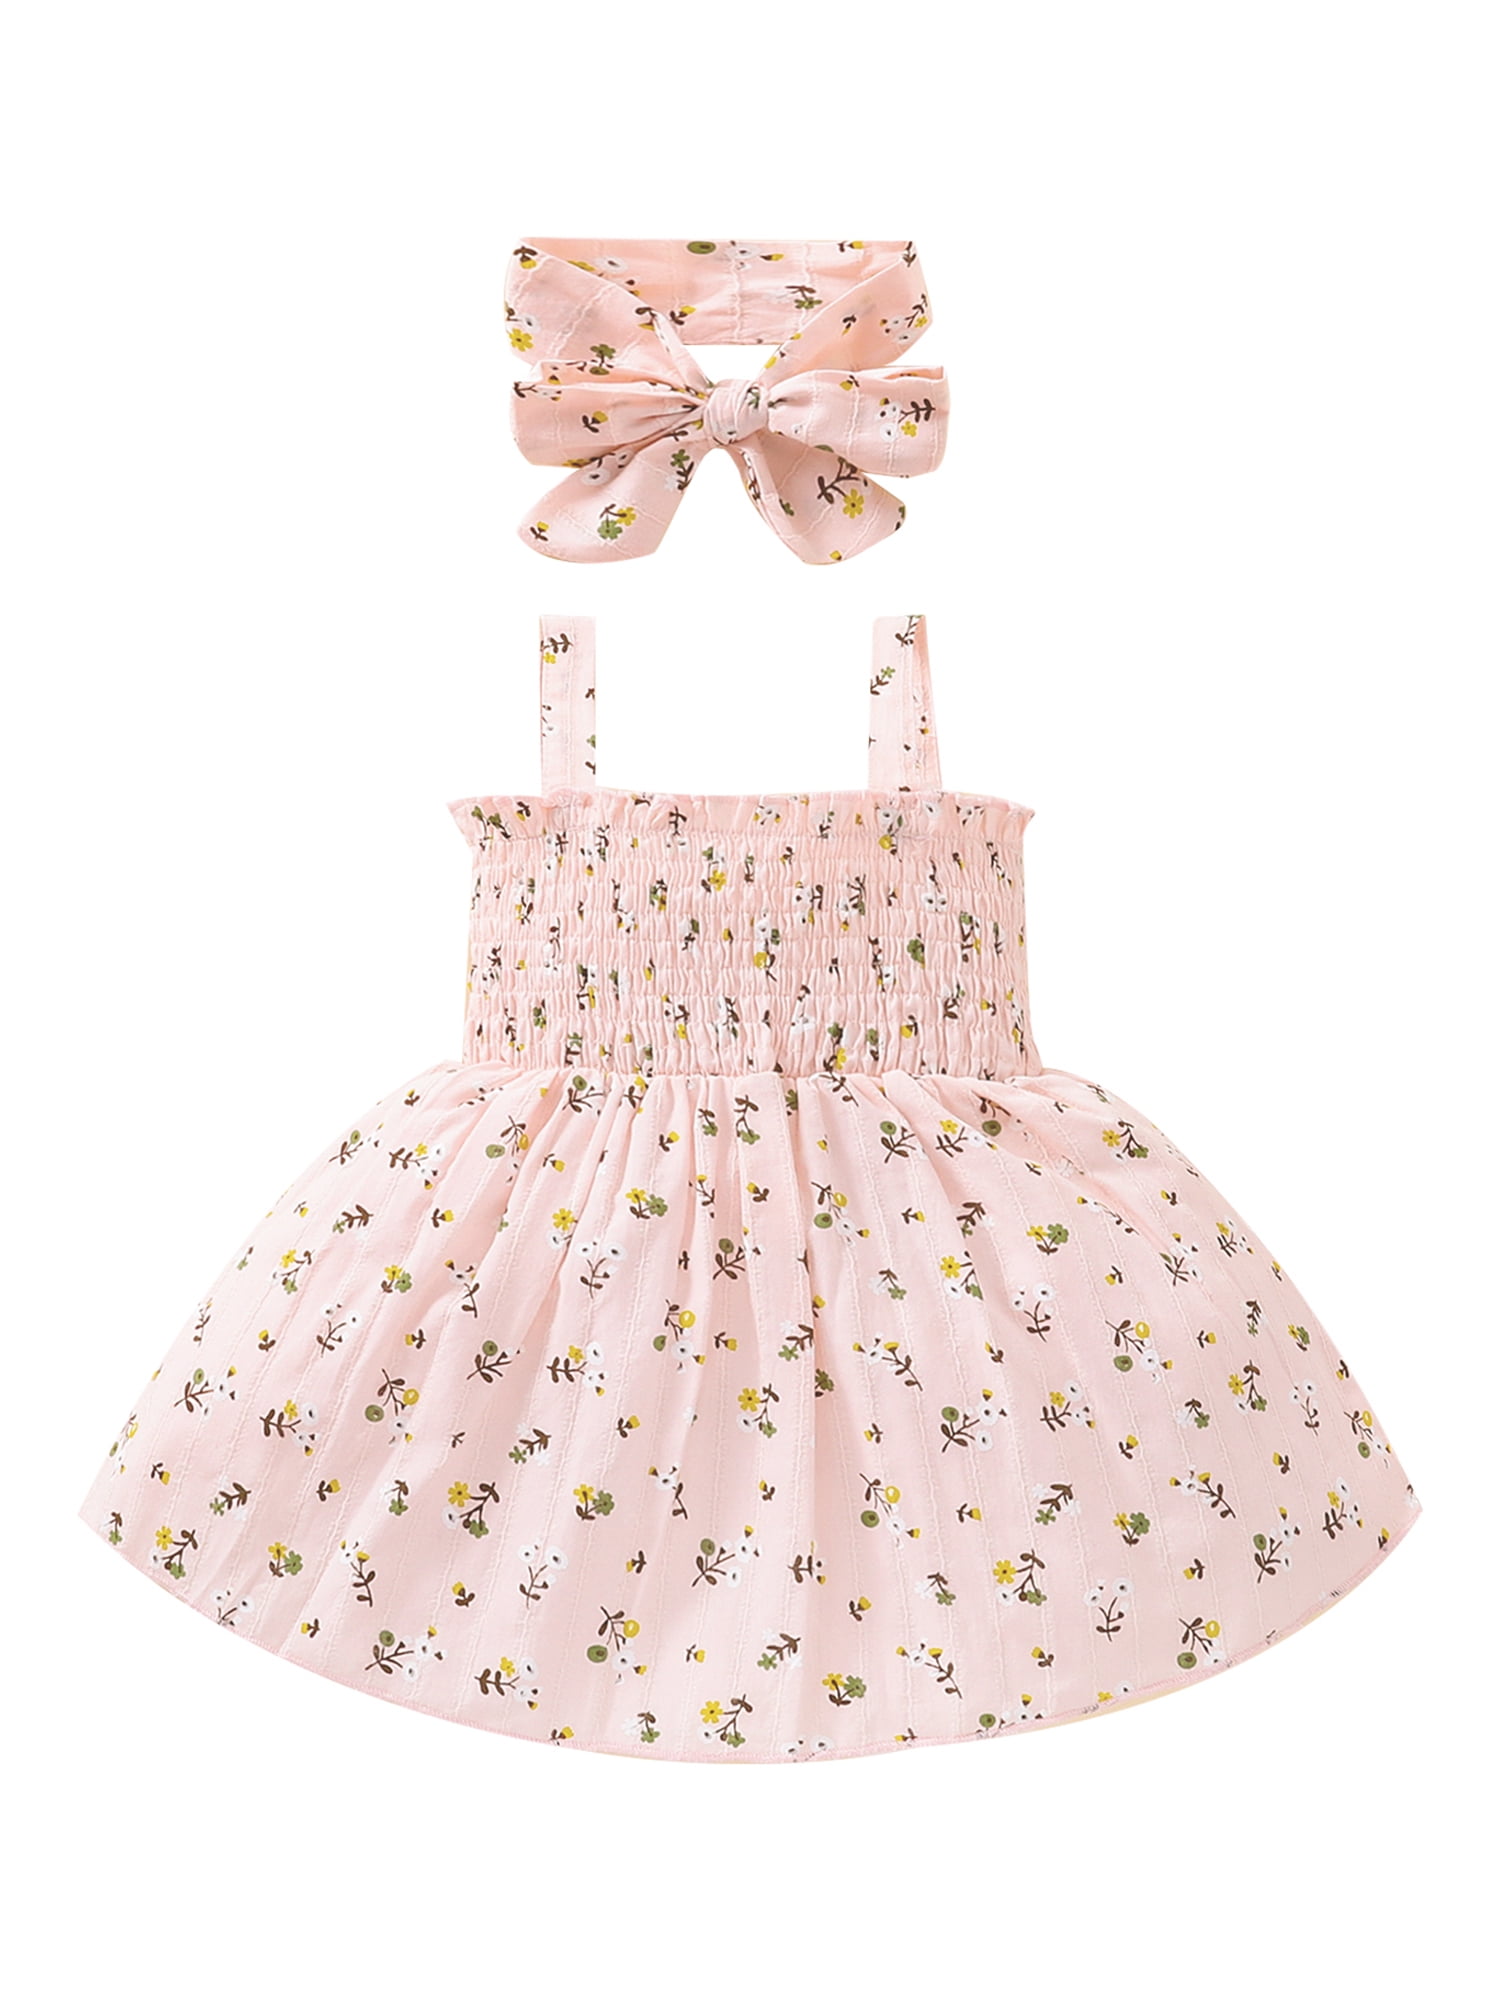 Toddler Dress Kids Baby Girls Sleeveless Floral Print Princess Dress Skirt